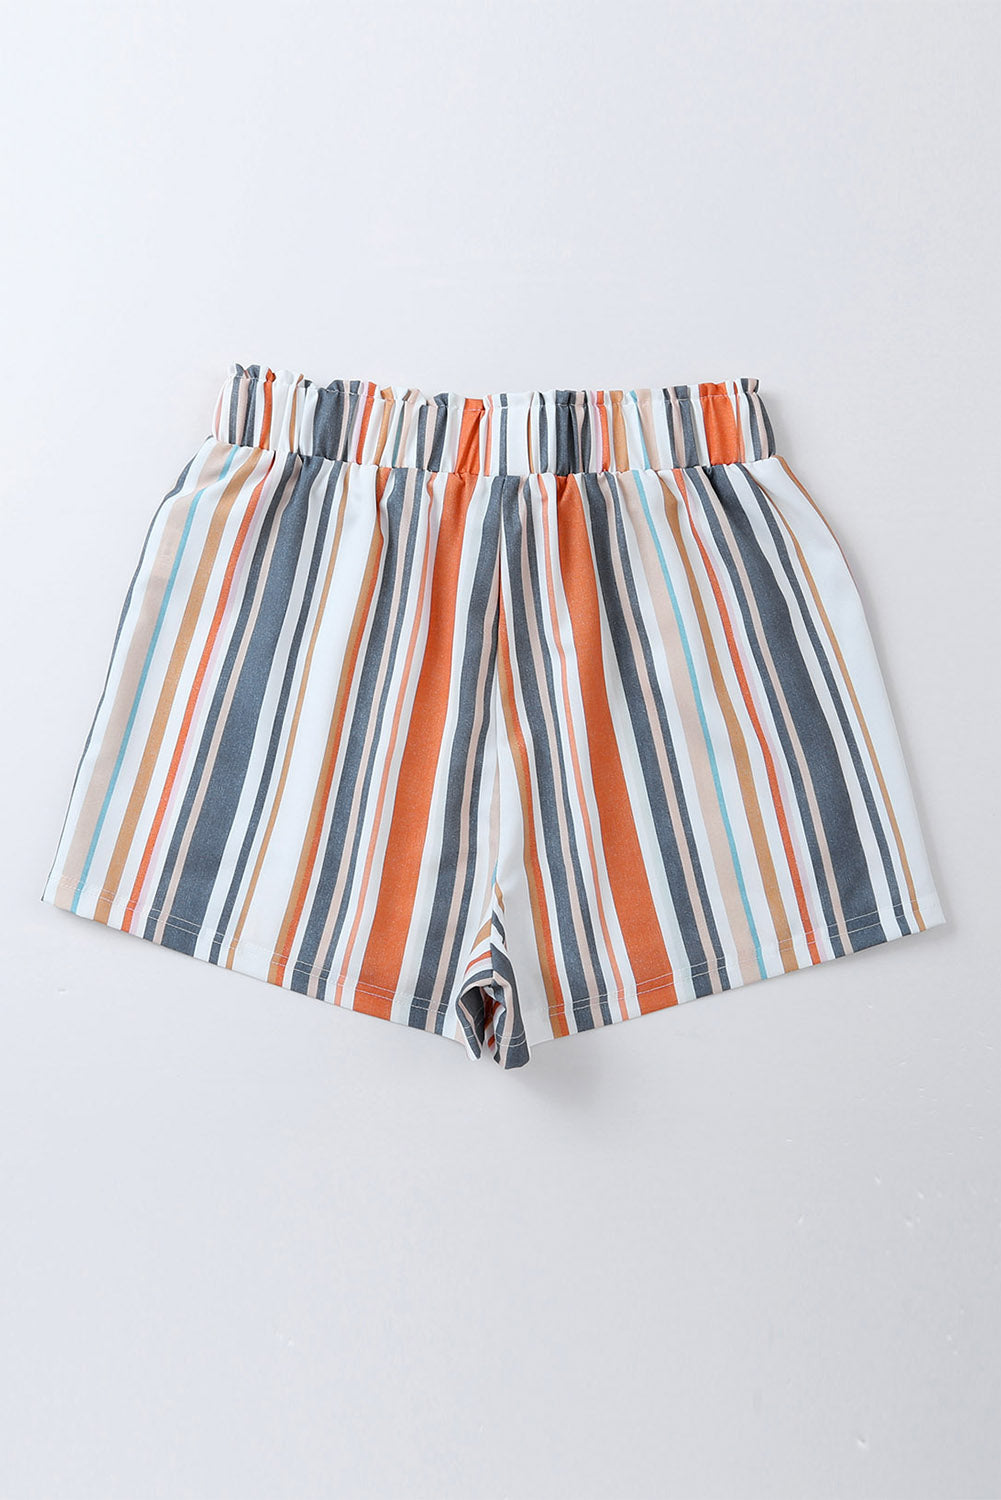 PREORDER- Striped Elastic Waist Shorts